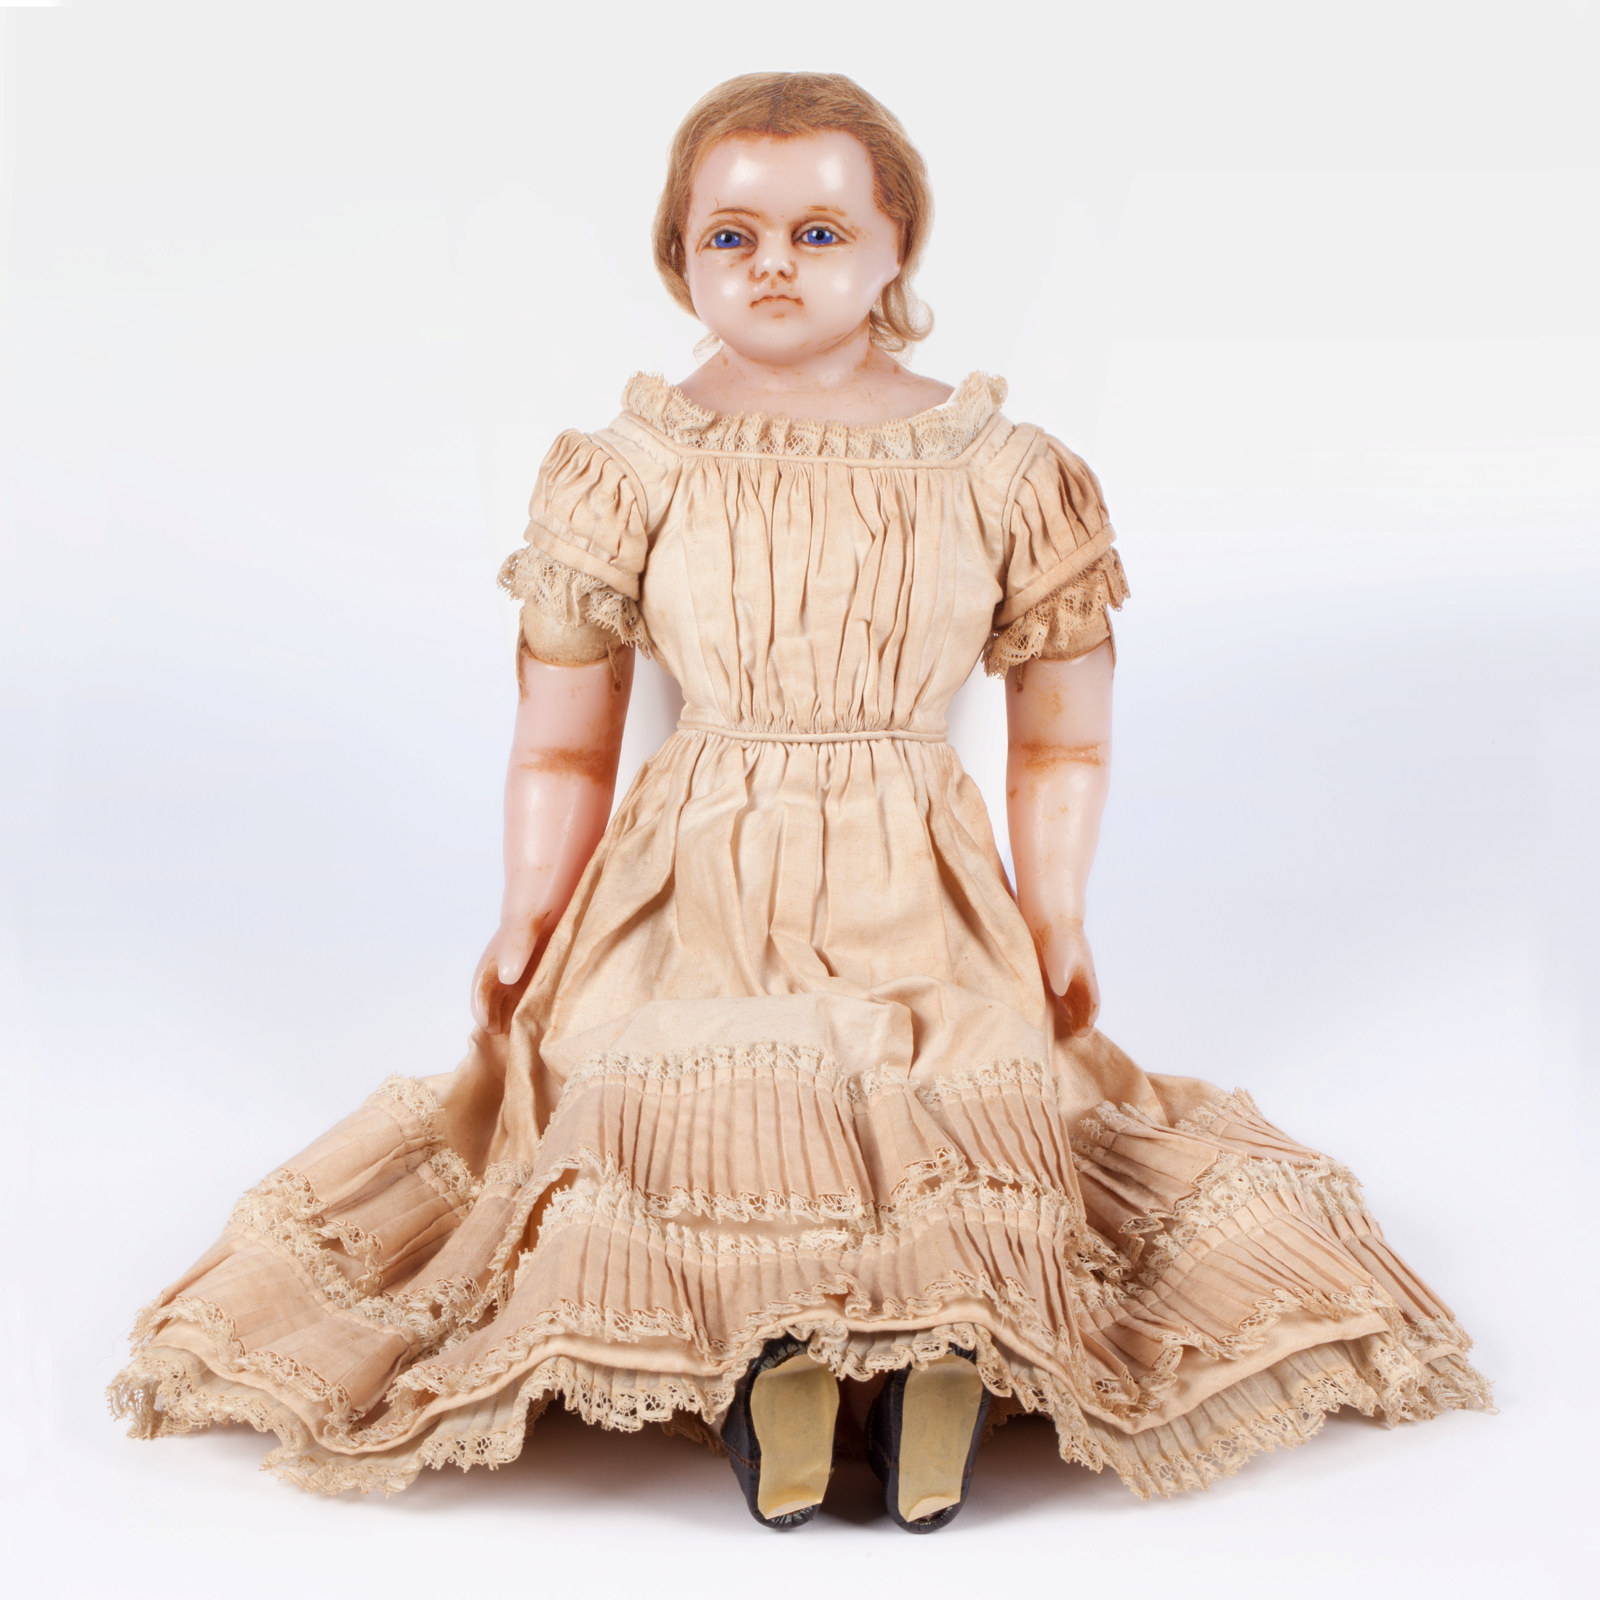 Dressed wax doll named Charlotte, 1853